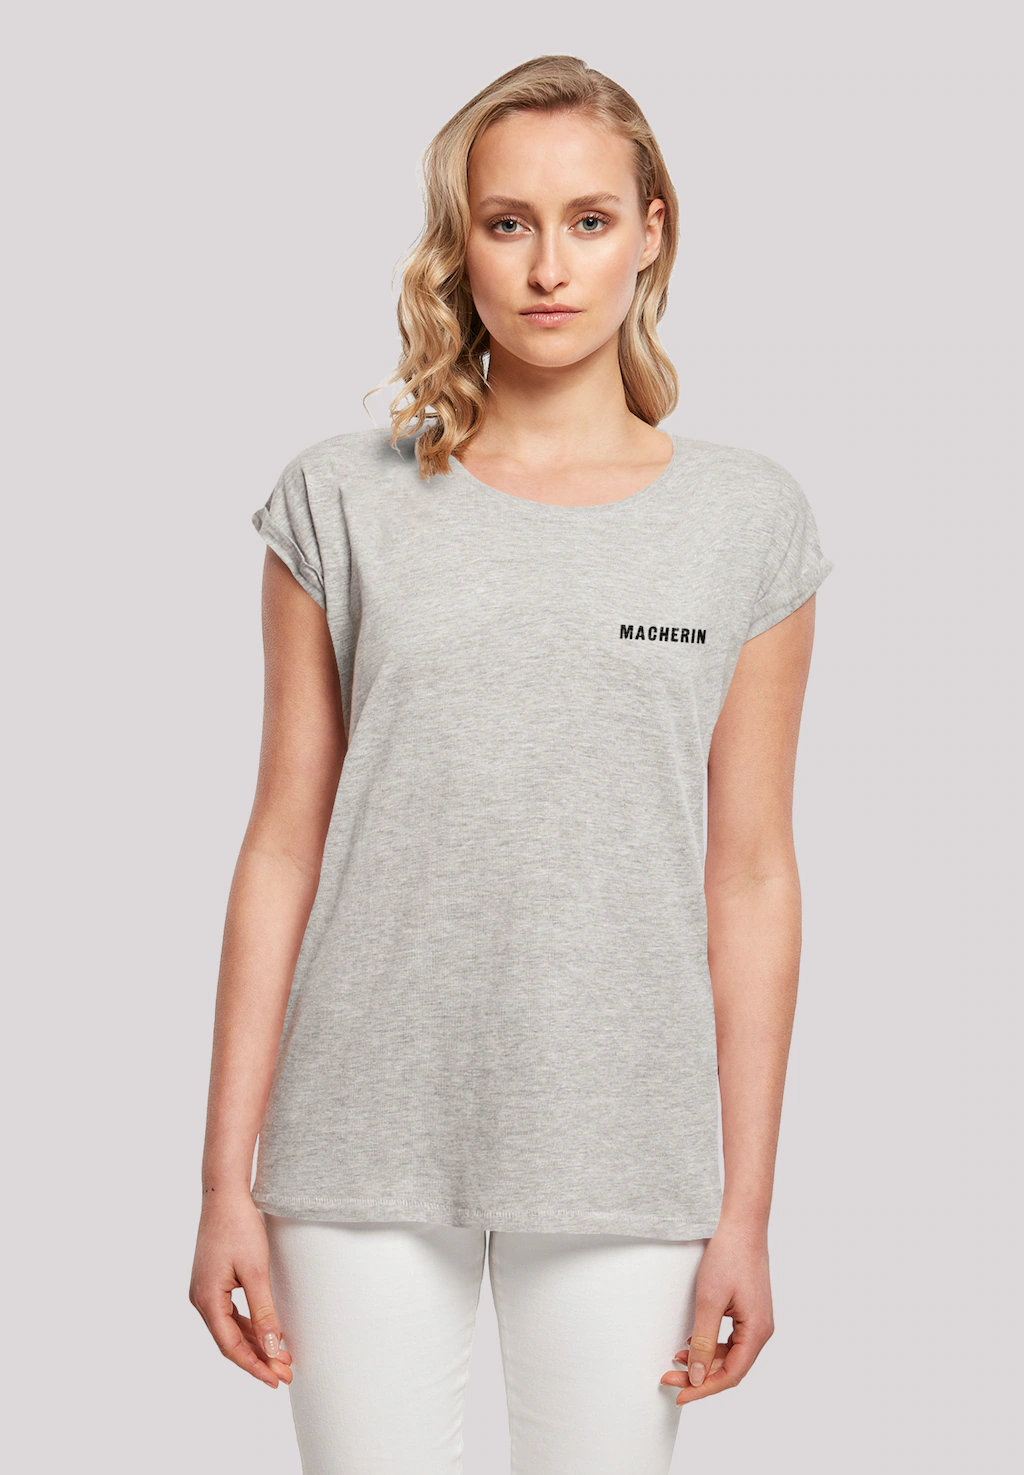 F4NT4STIC T-Shirt "Macherin", Jugendwort 2022, slang günstig online kaufen